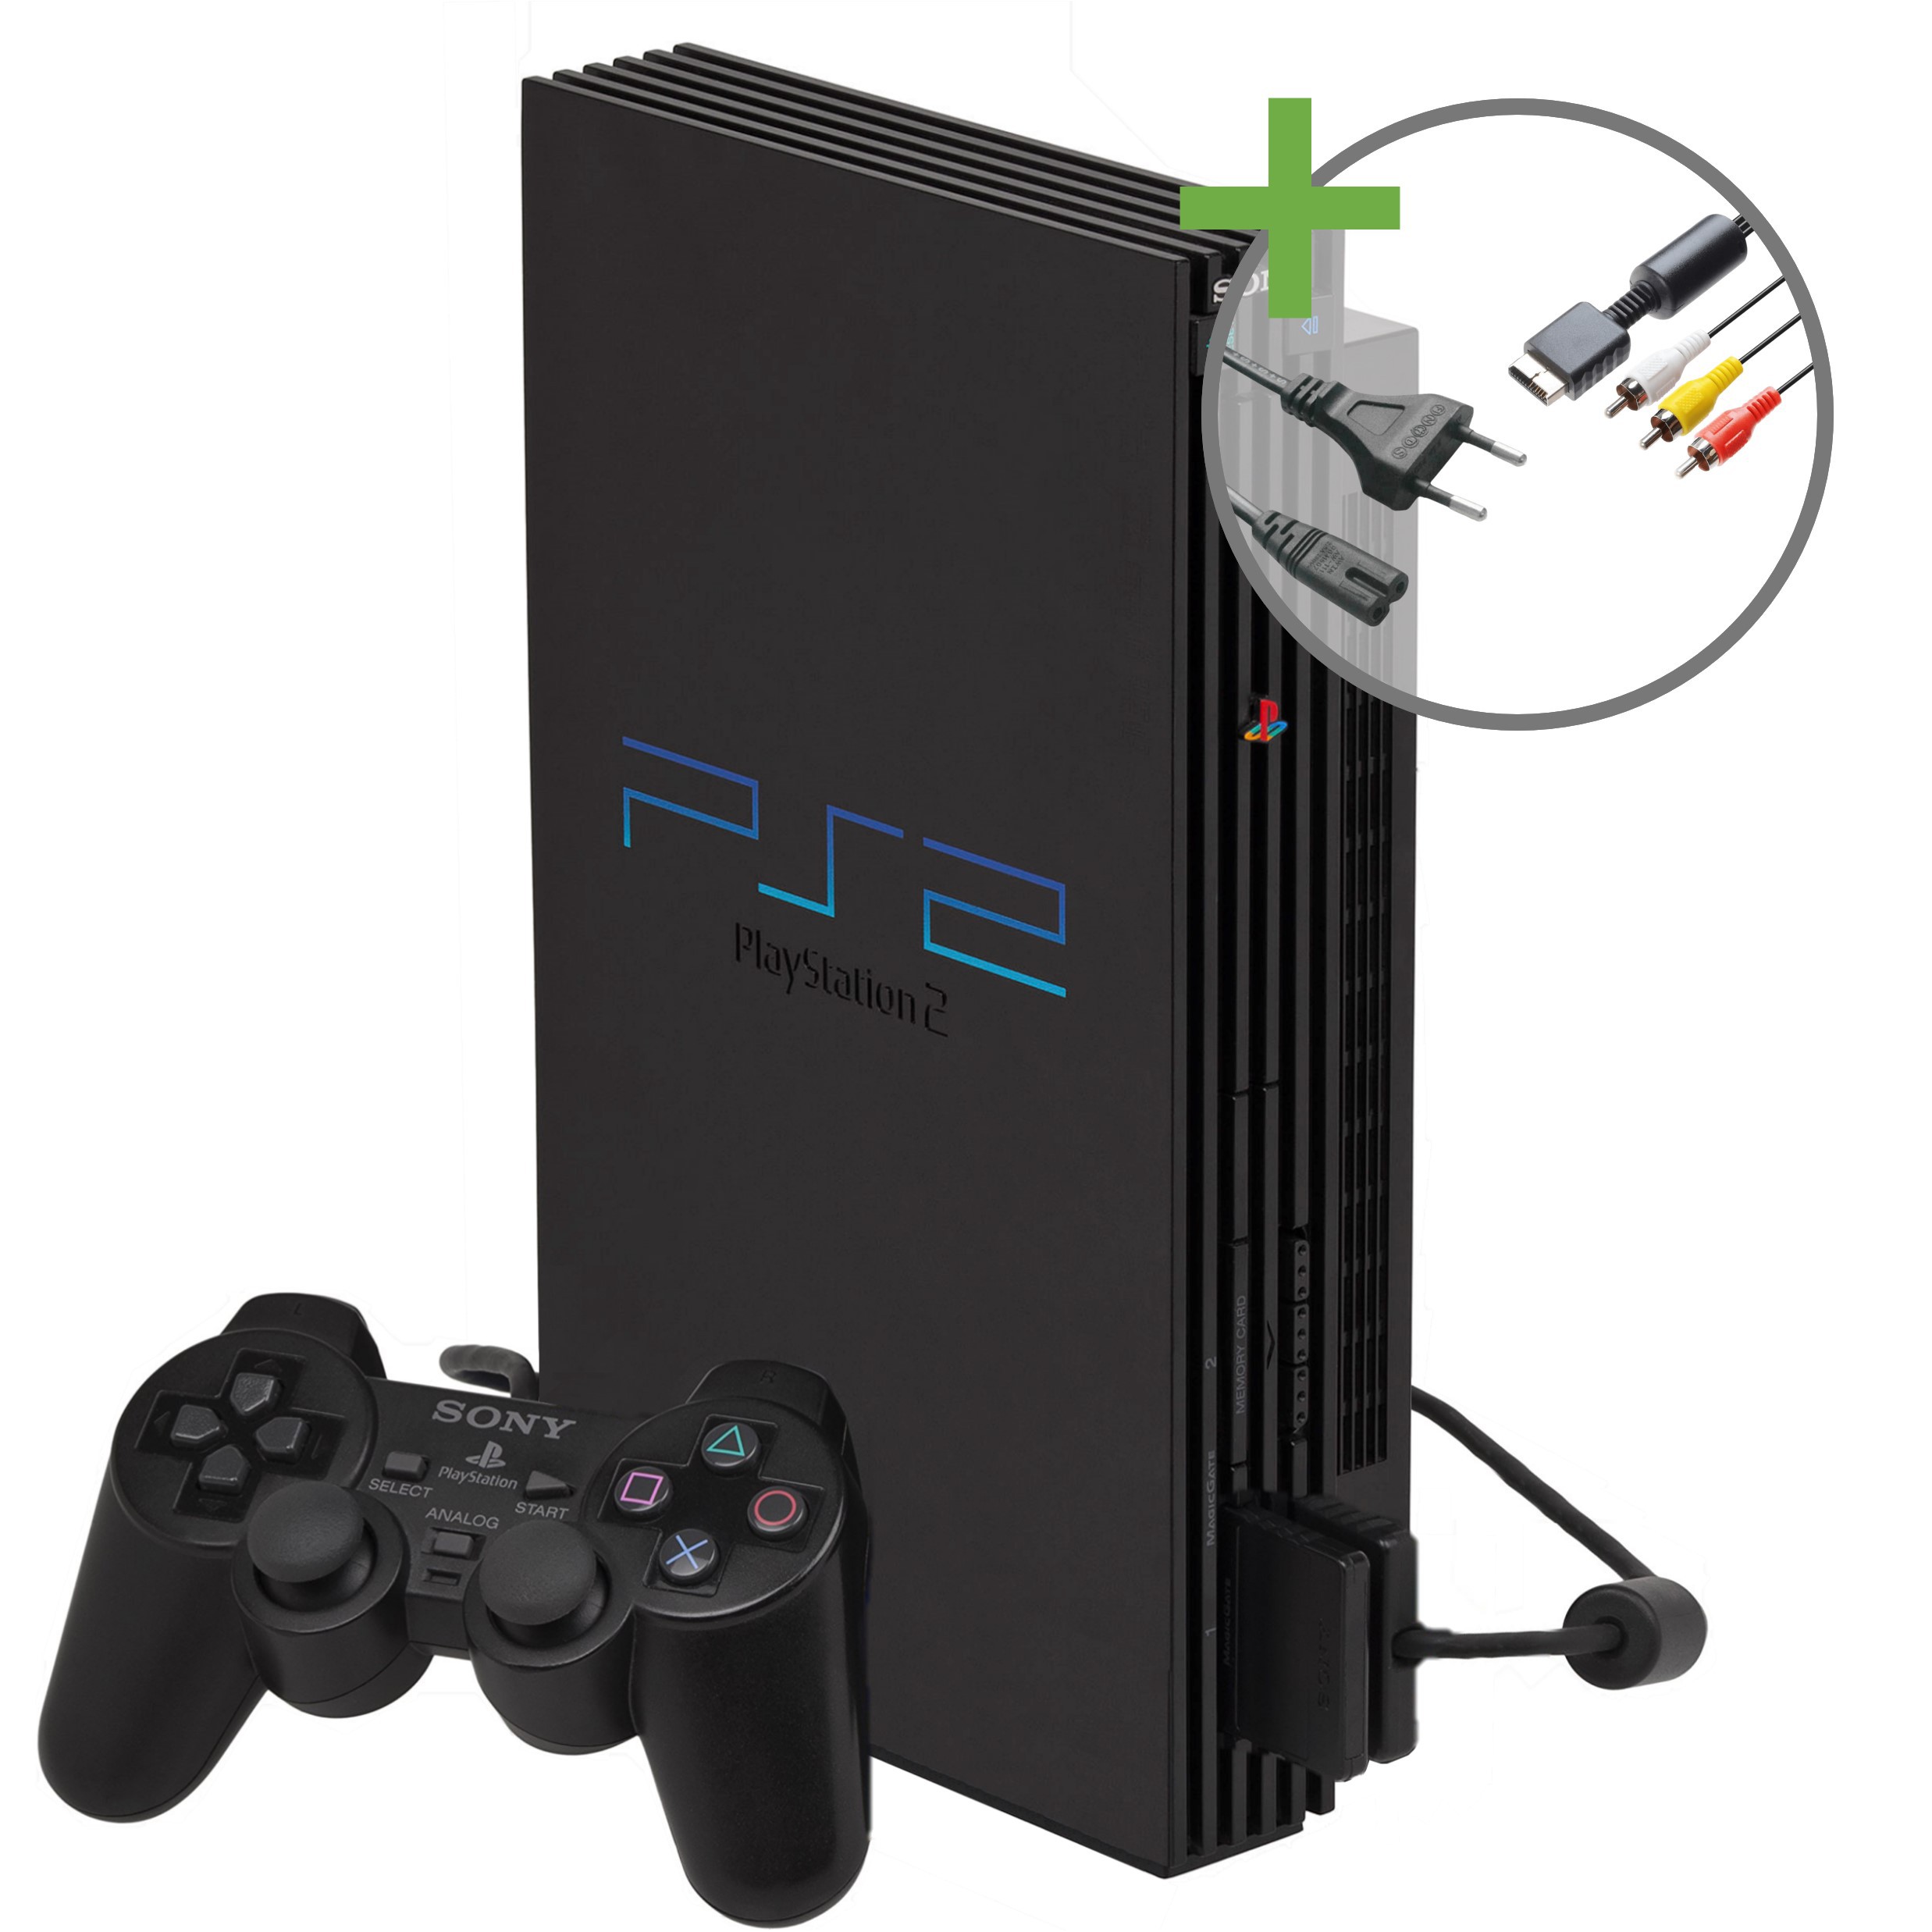 Sony PlayStation 2 Phat Starter Pack - Black Edition Kopen | Playstation 2 Hardware